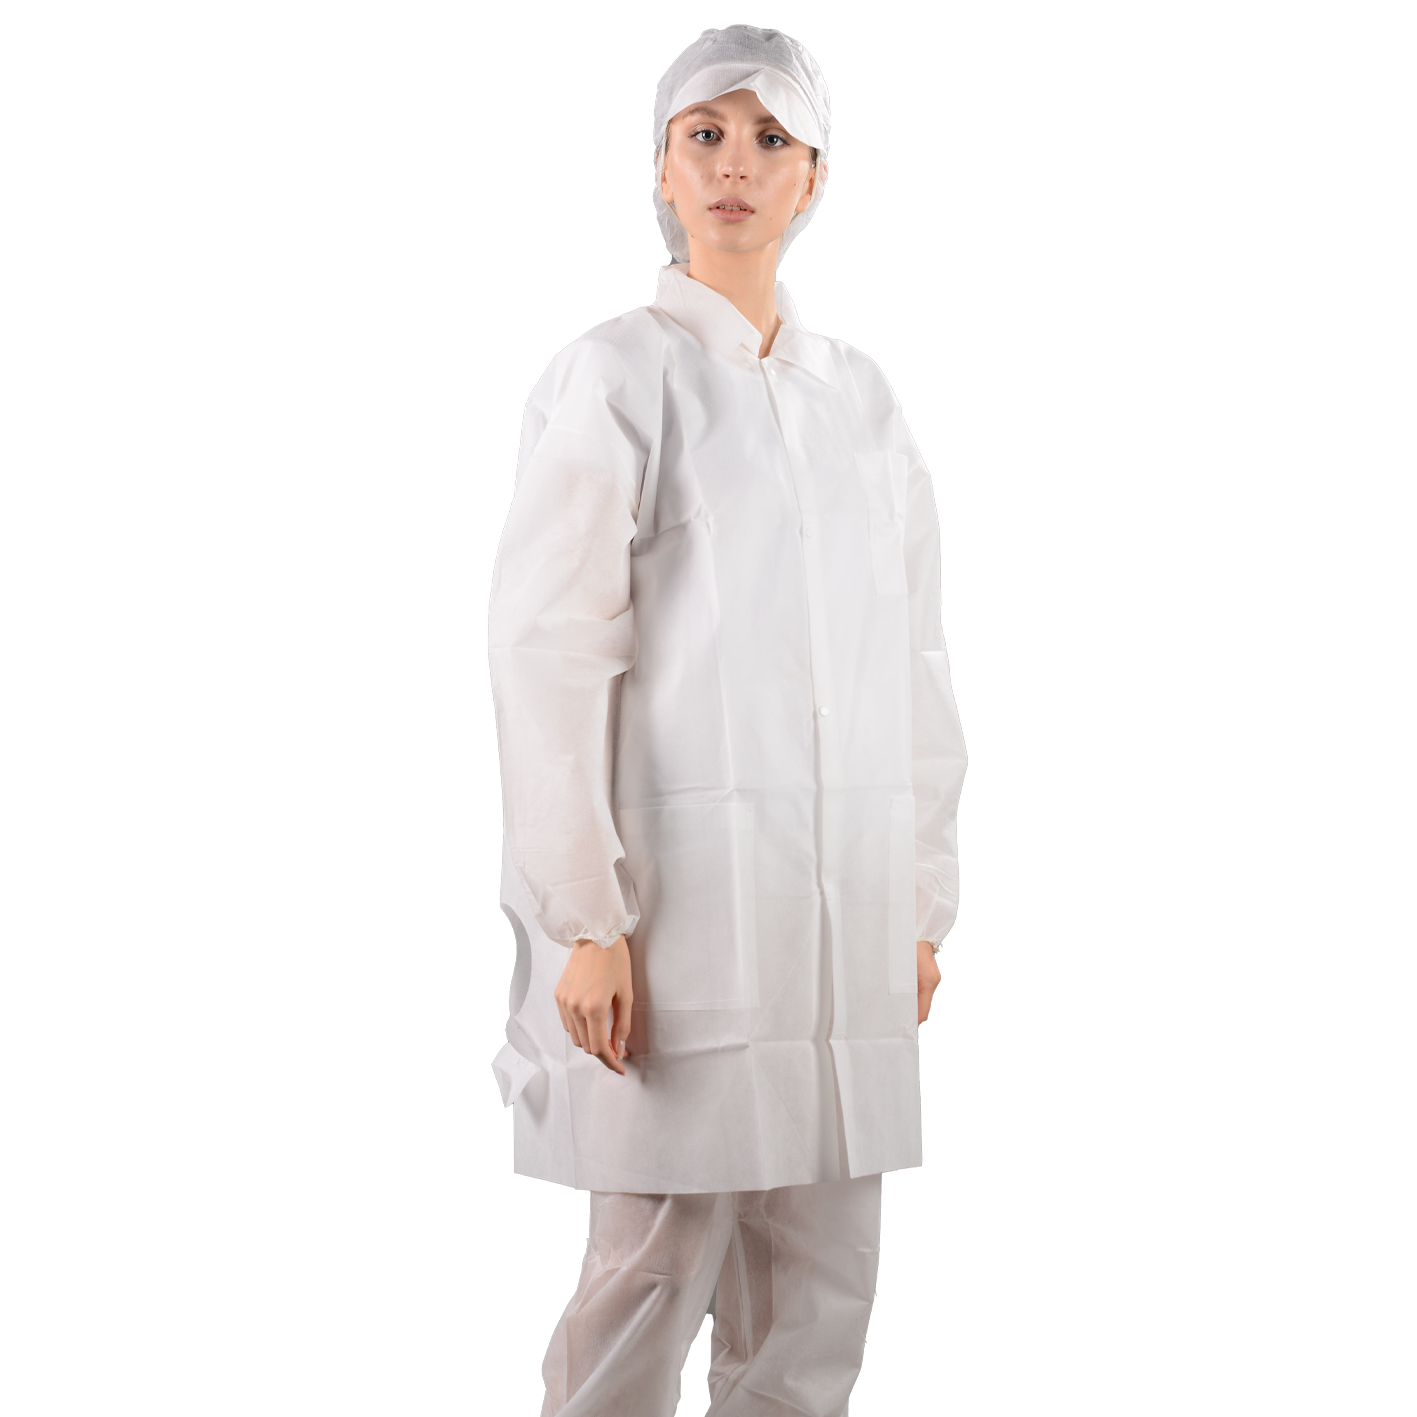 Disposable Non-Woven Lab Coats A Versatile Solution for Various Industries